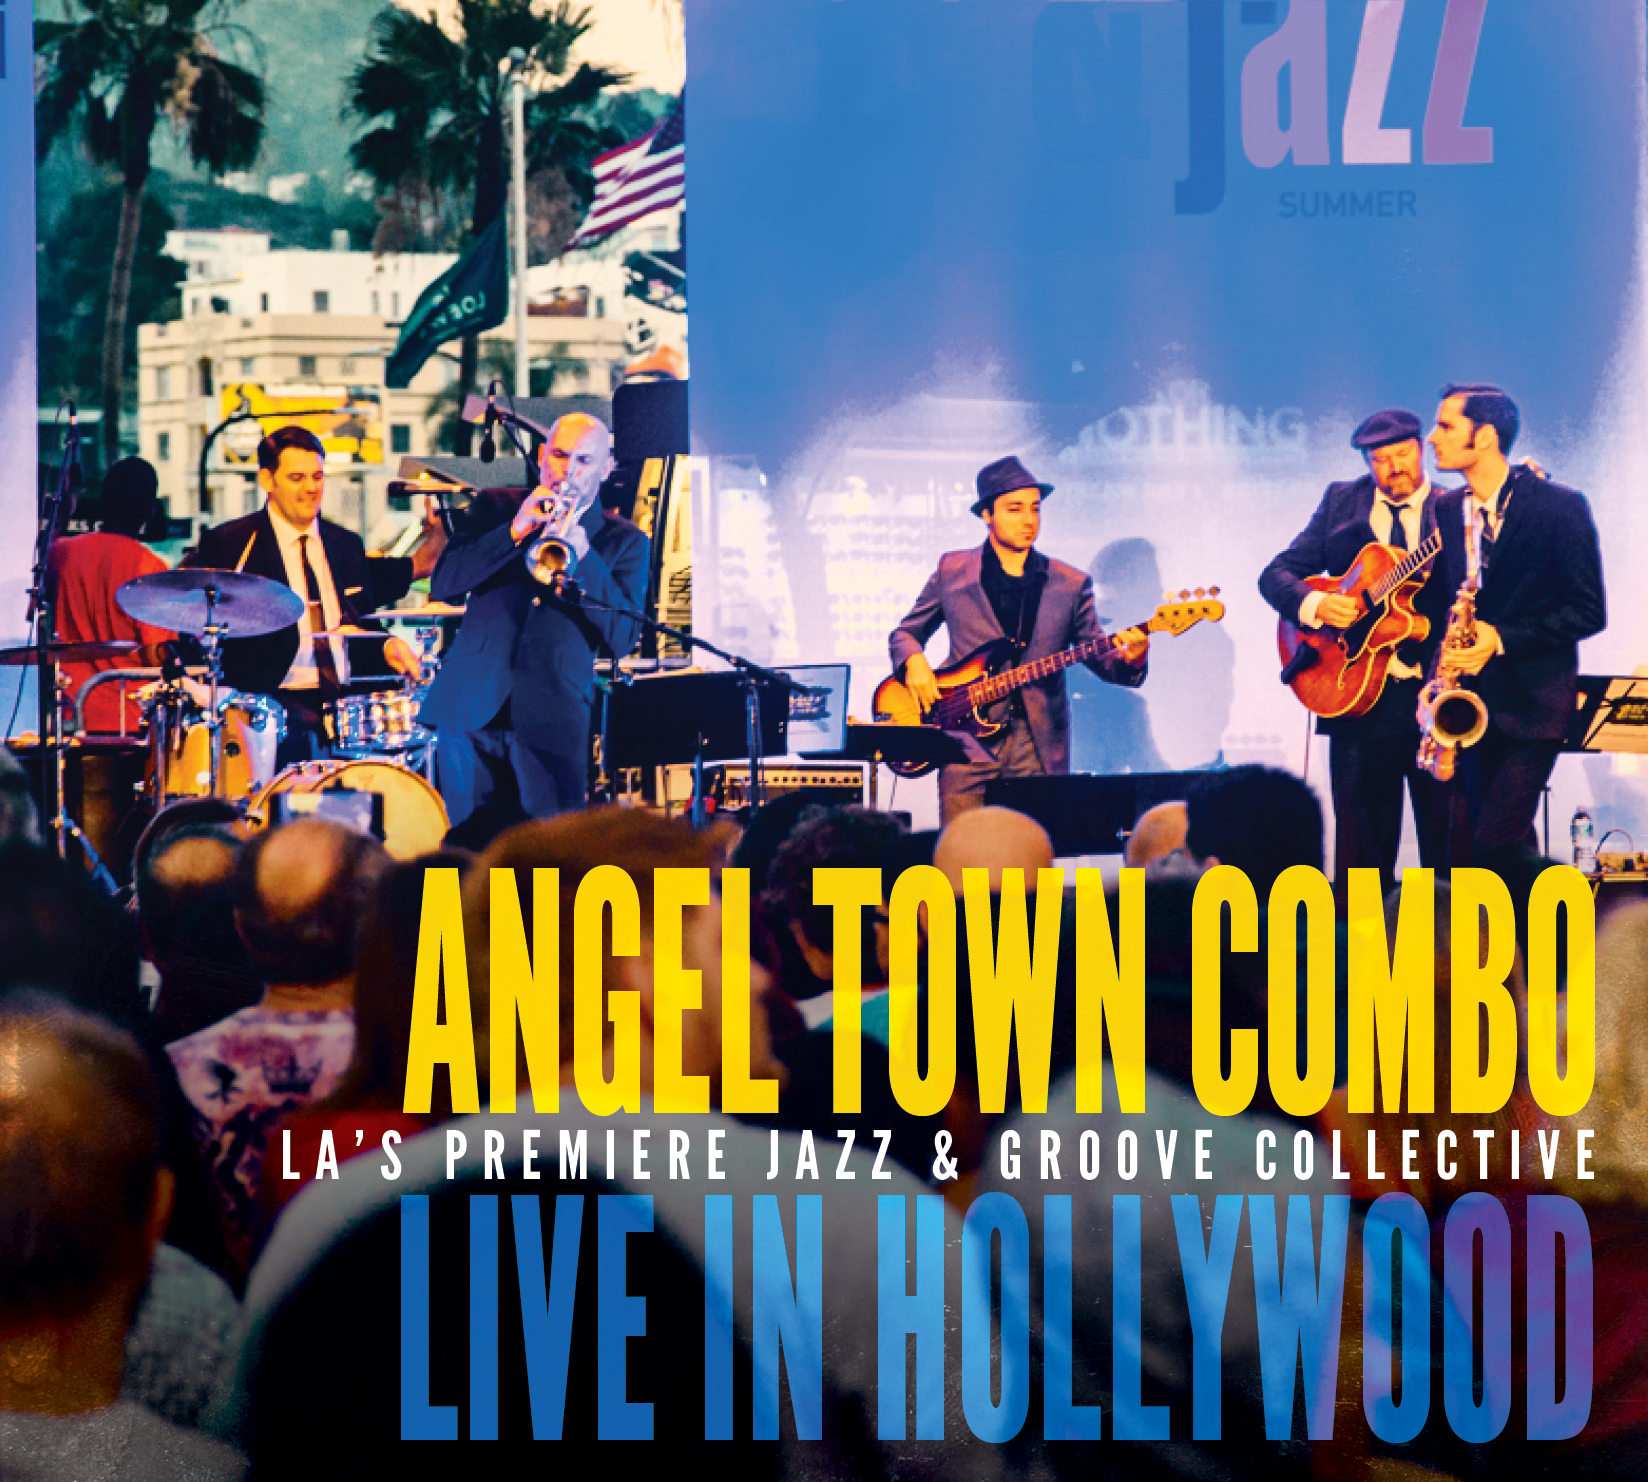 Angel Town Combo - Live in Hollywood Album Art.jpg